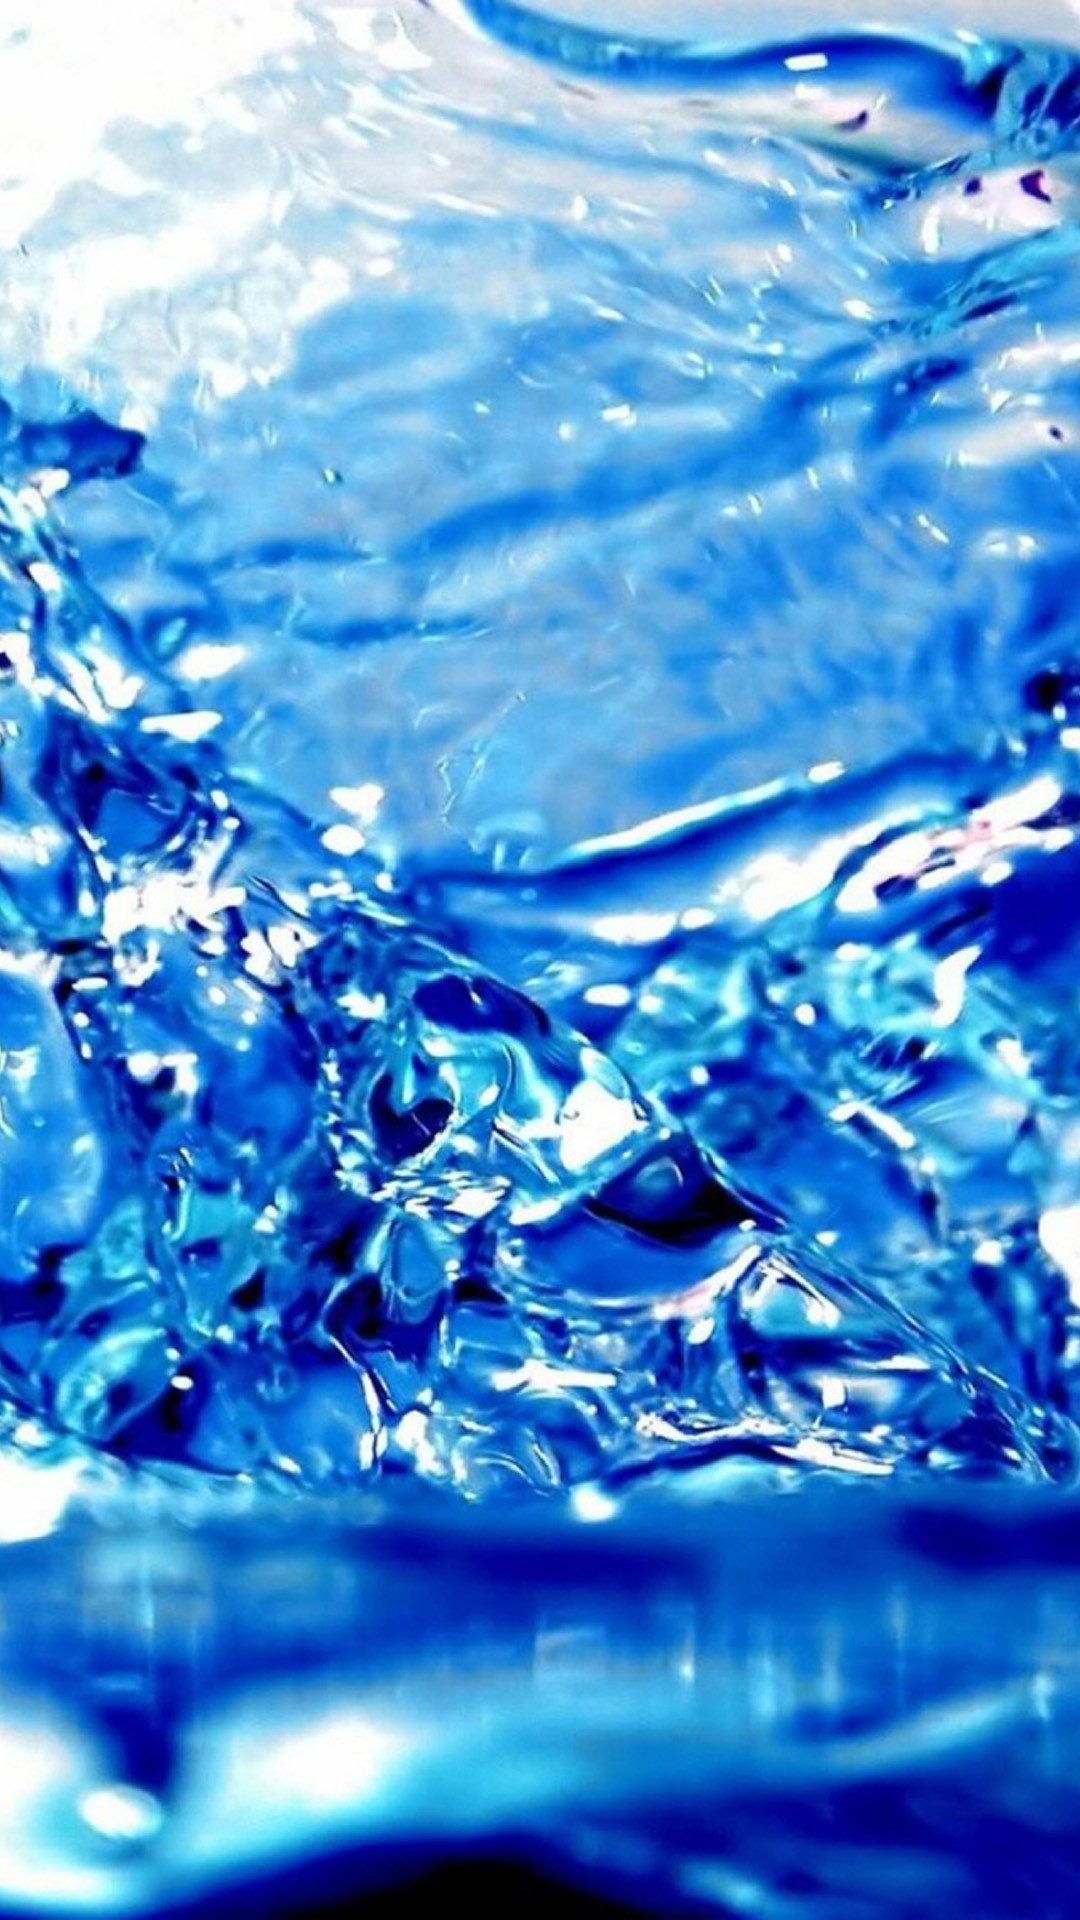 1080x1920 Blue Water Splash Background iPhone 6 wallpaper